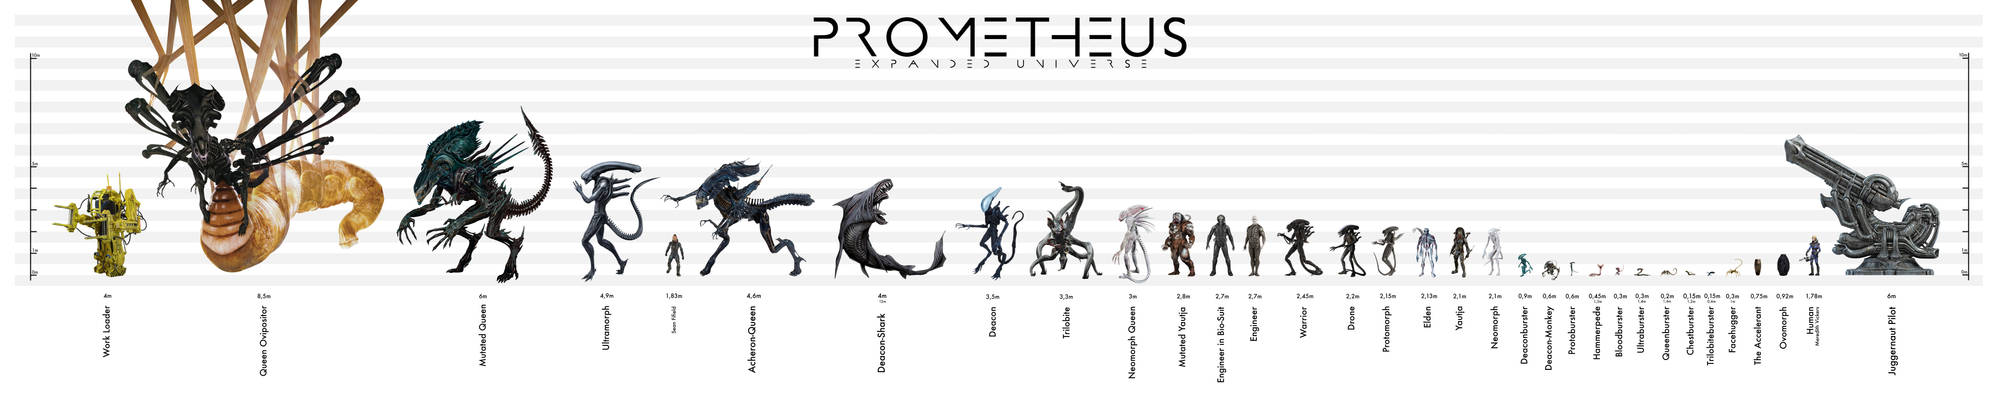 Prometheus Size Chart - Expanded Universe